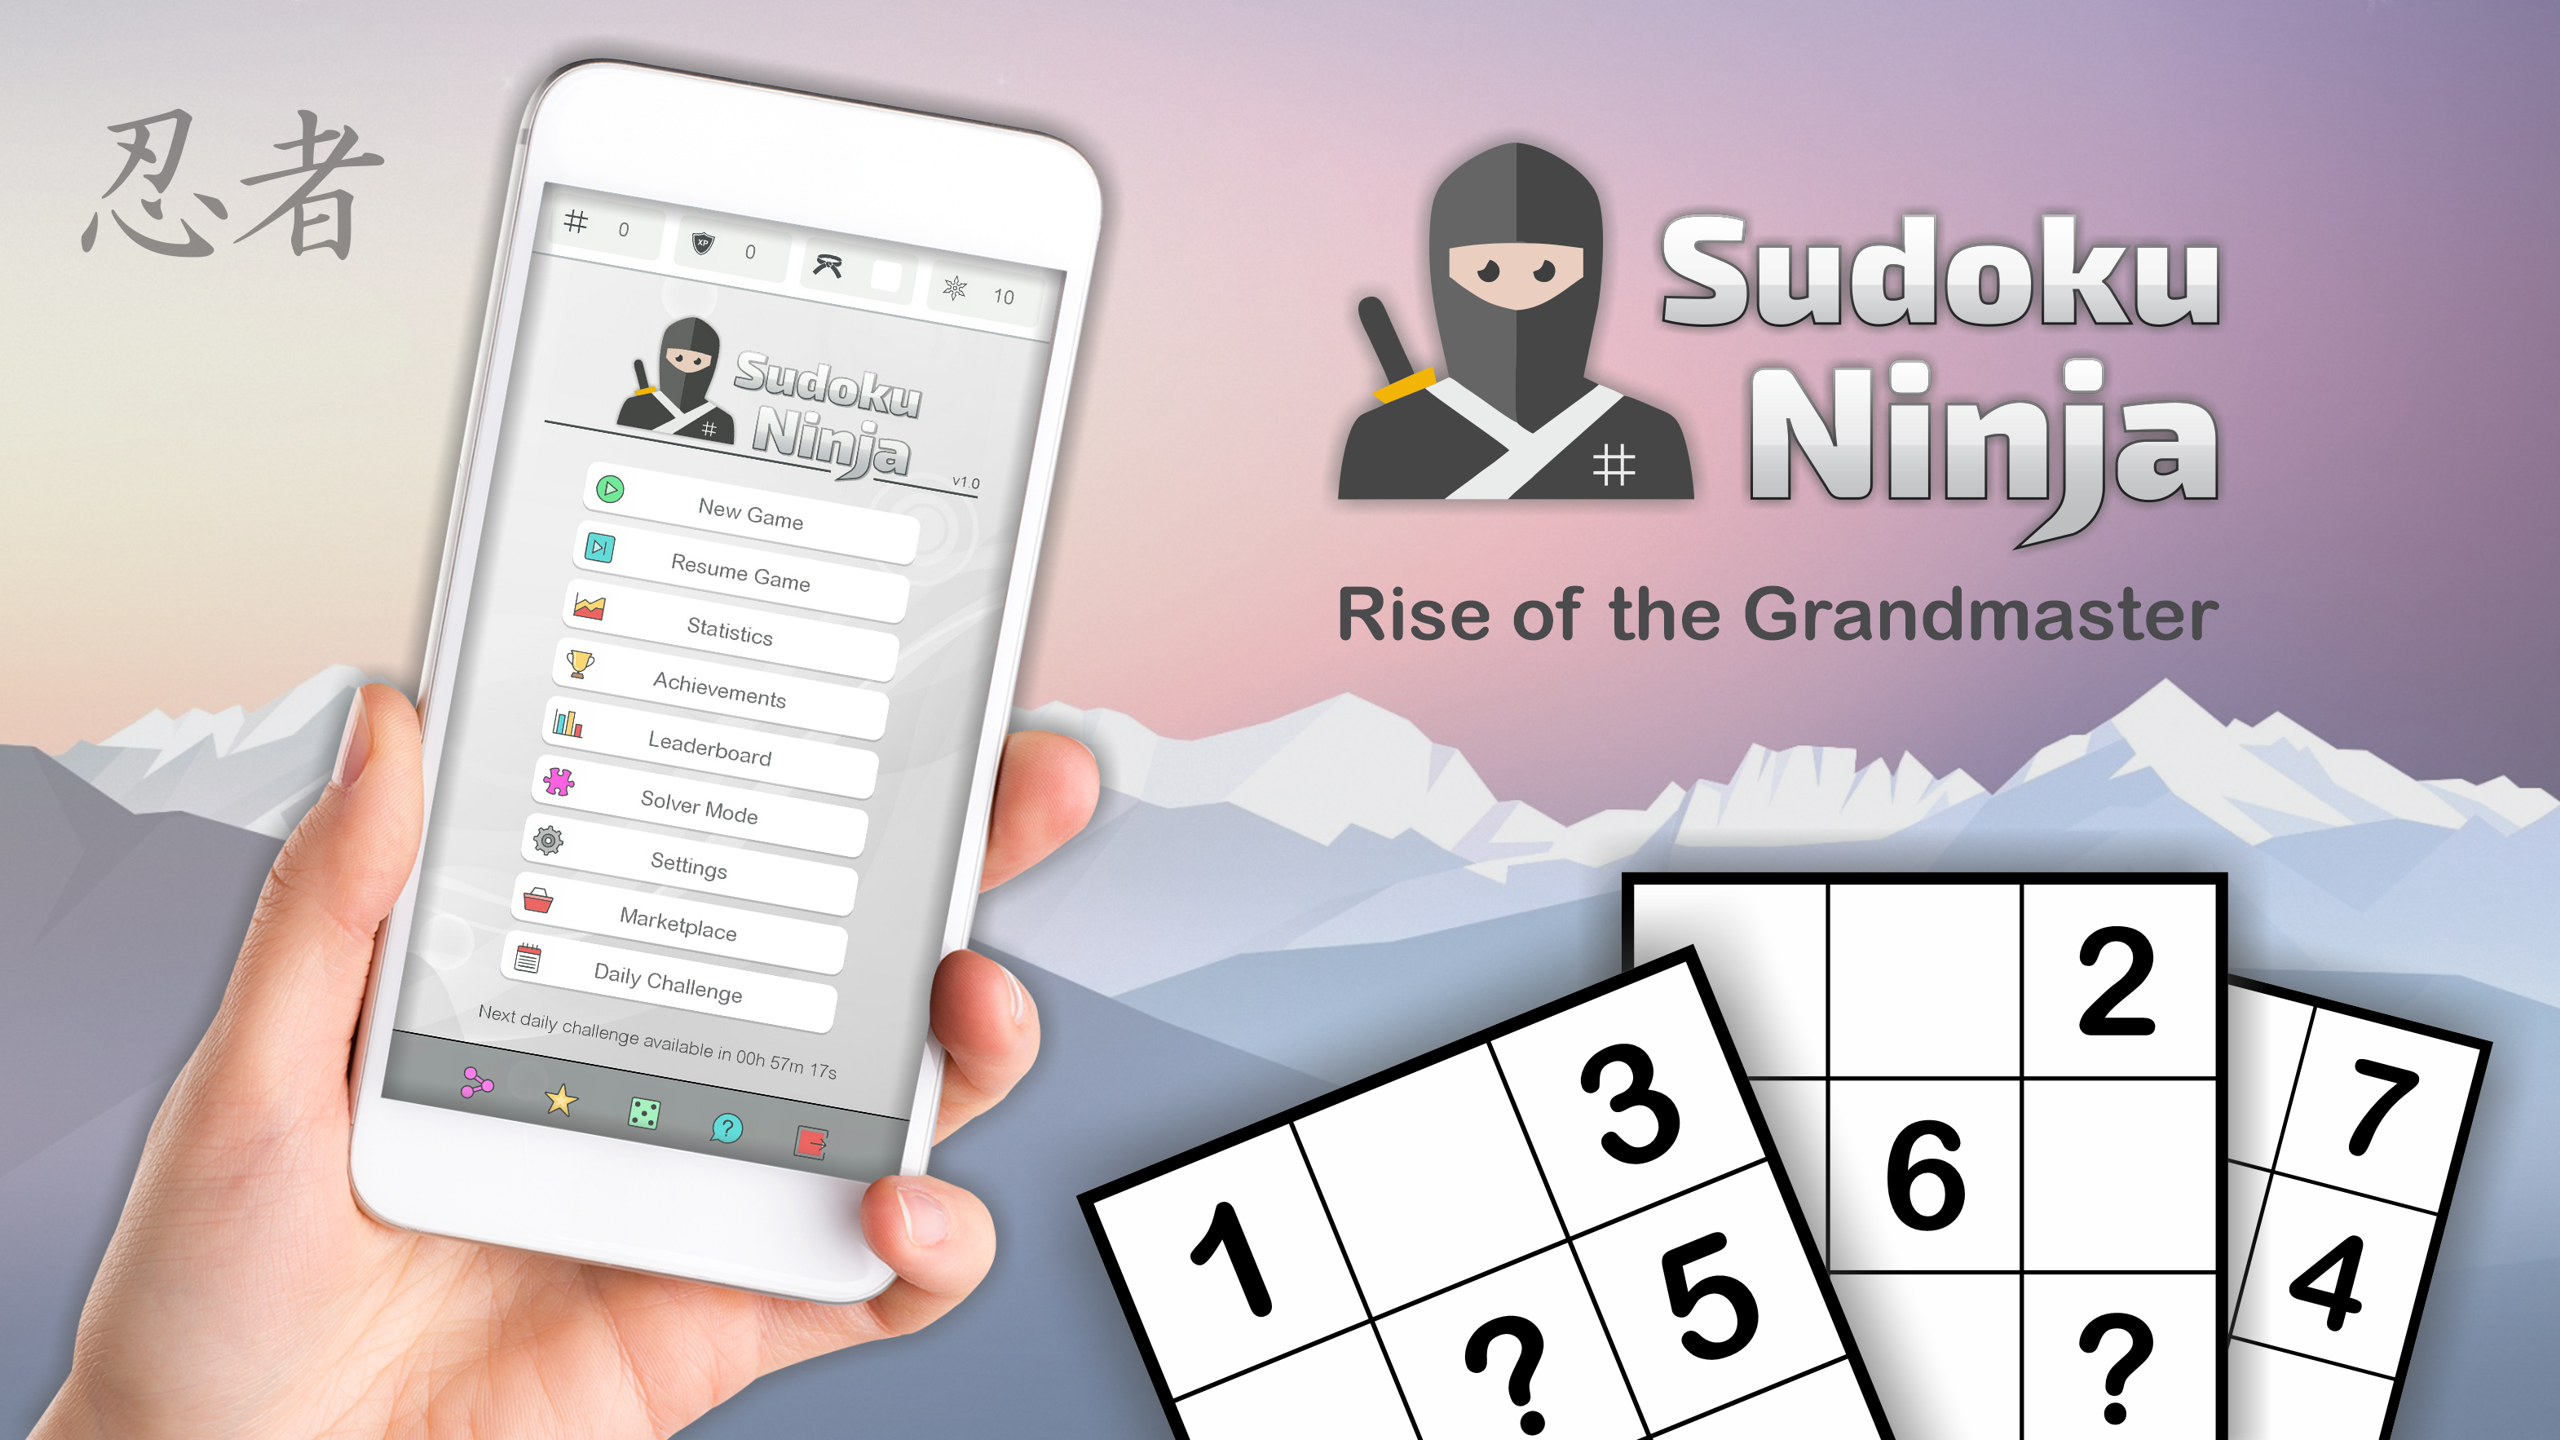 Sudoku Ninja - Rise of the Grandmaster